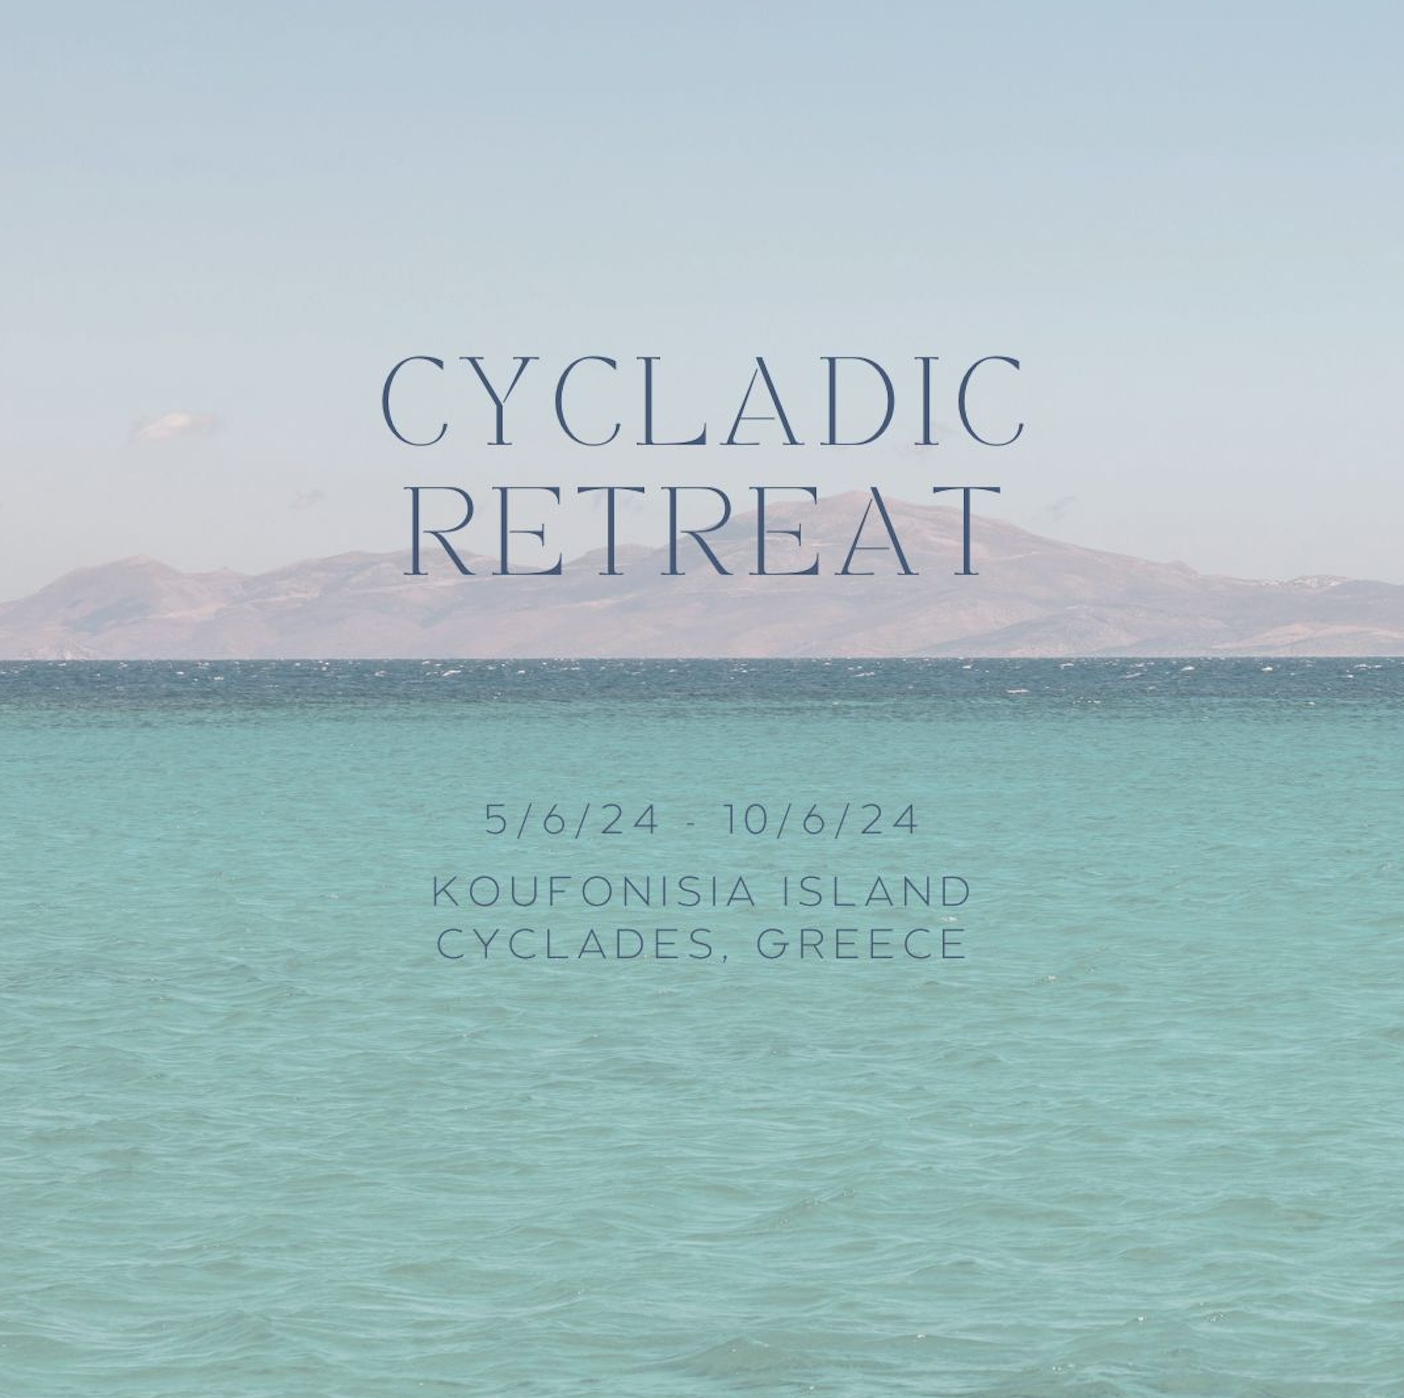 Cycladic Retreat